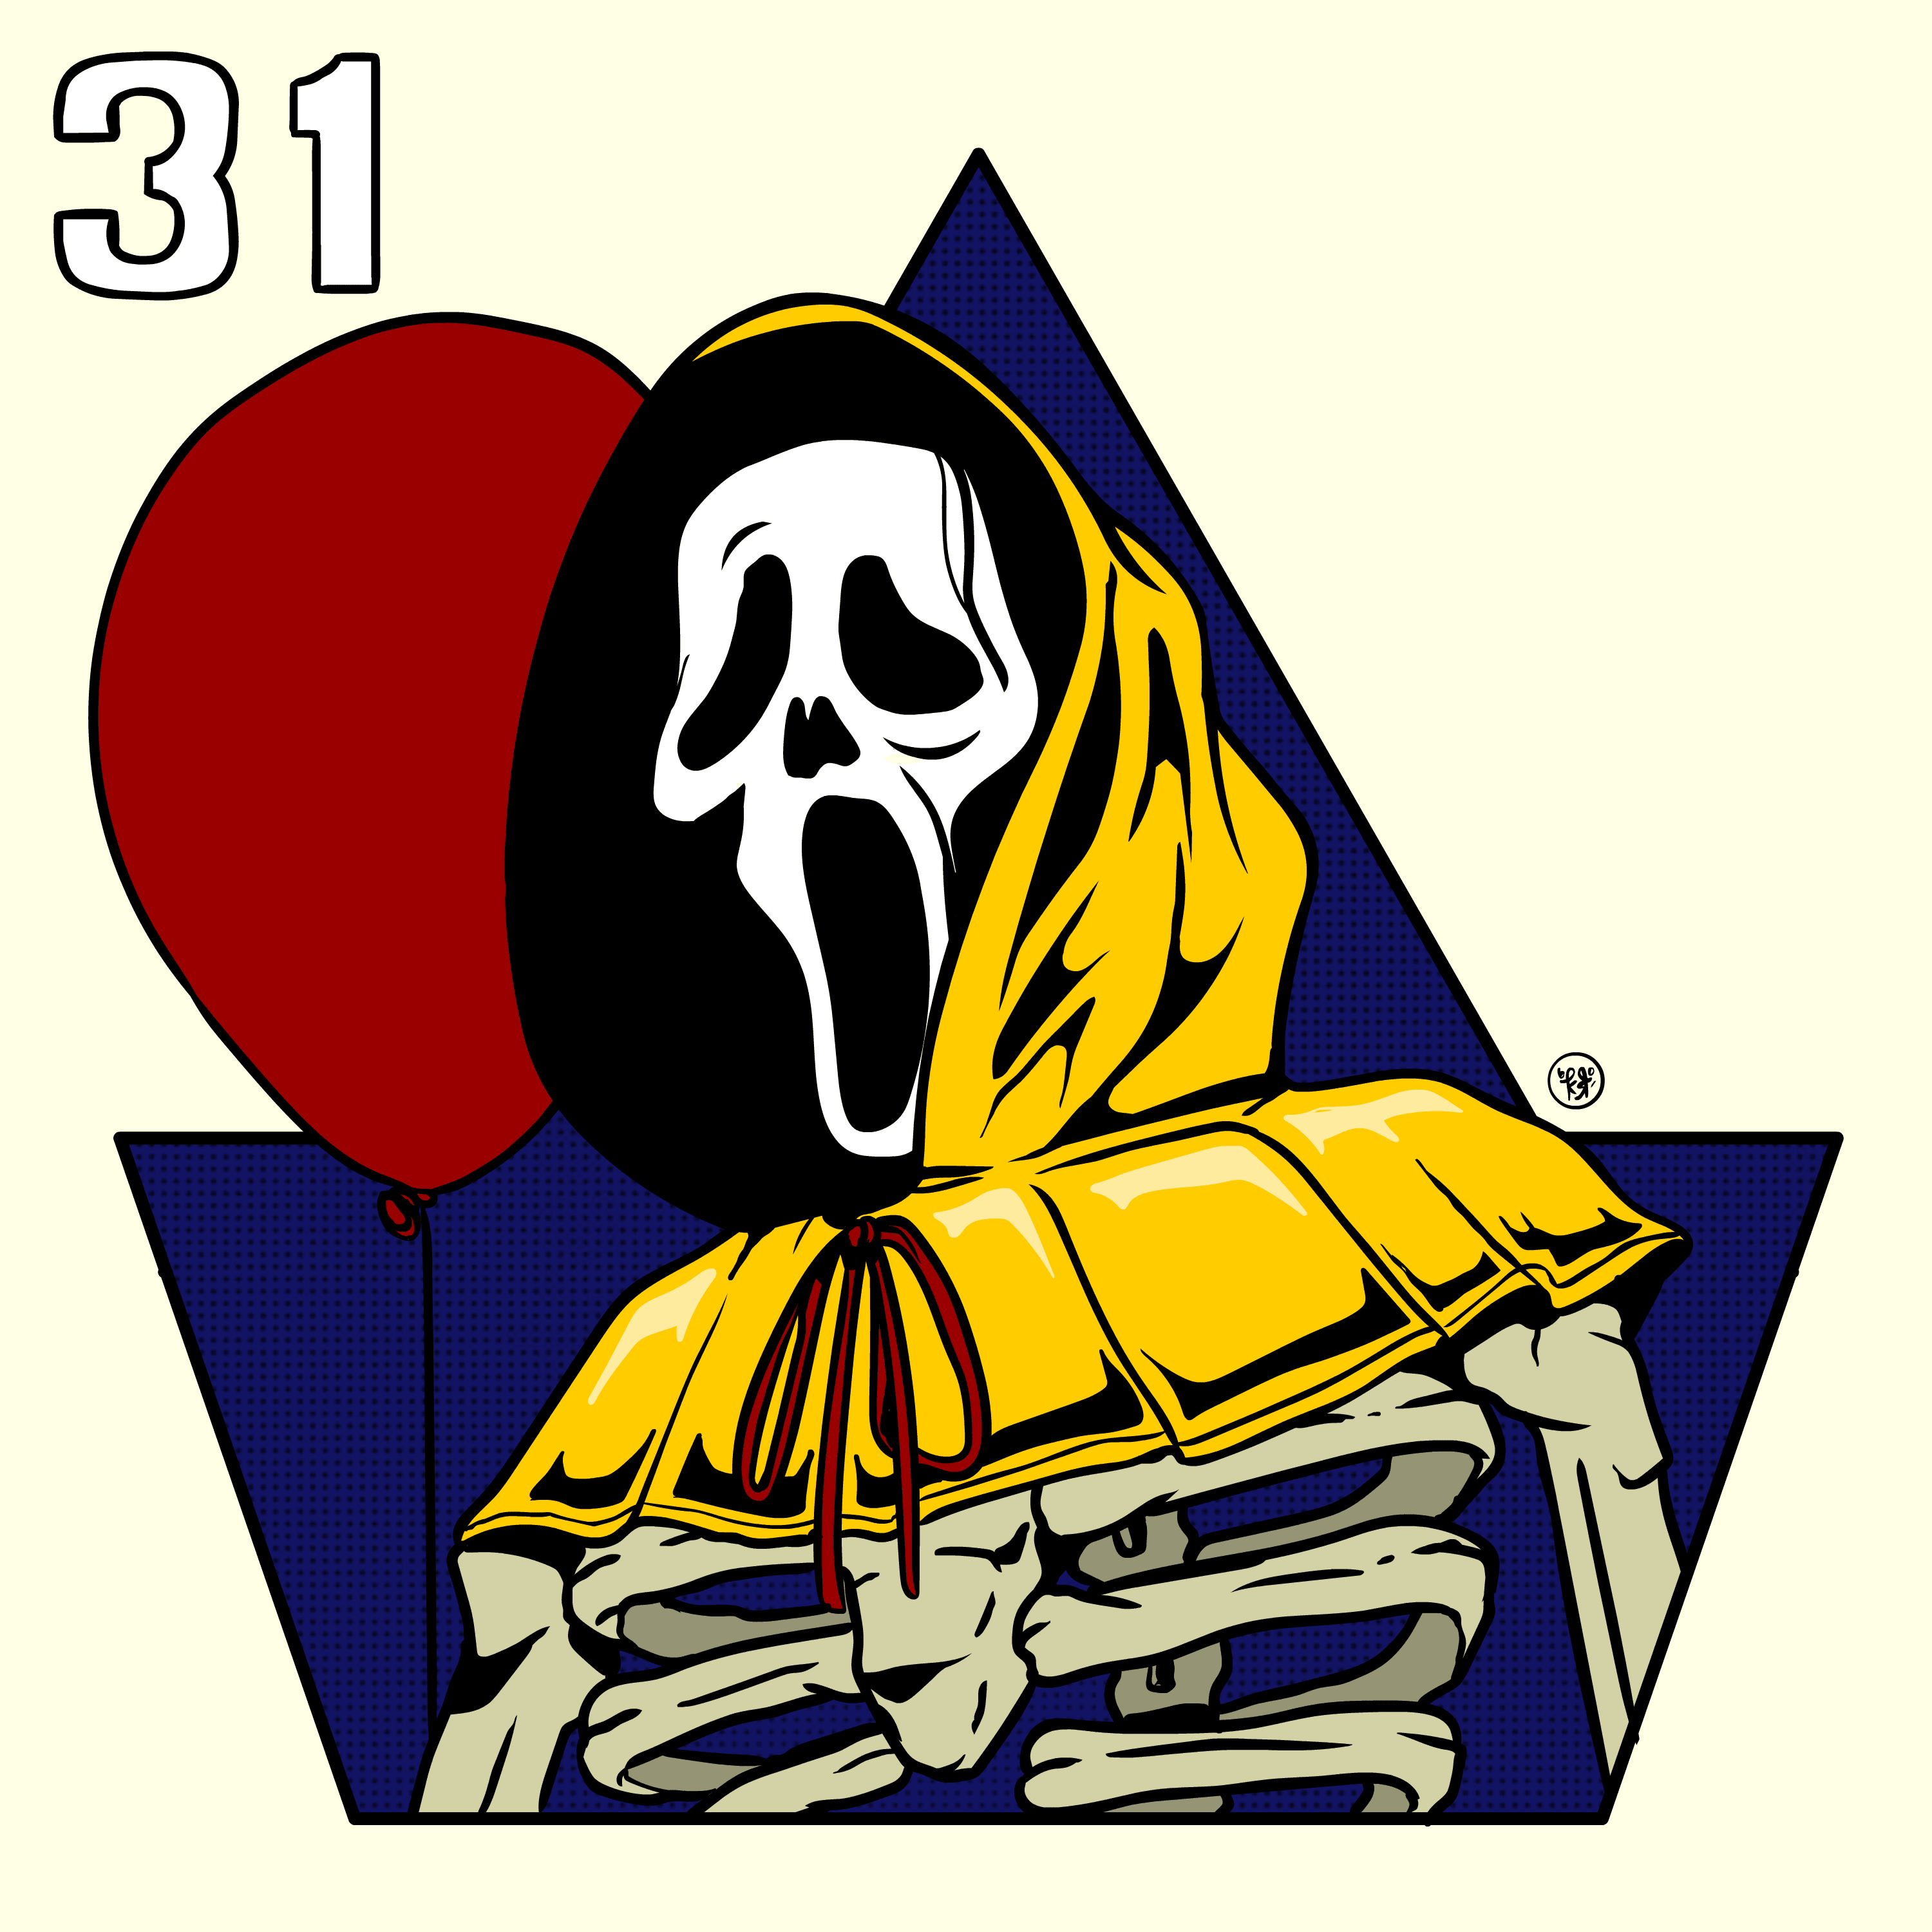 Mintober #31 - Ghost